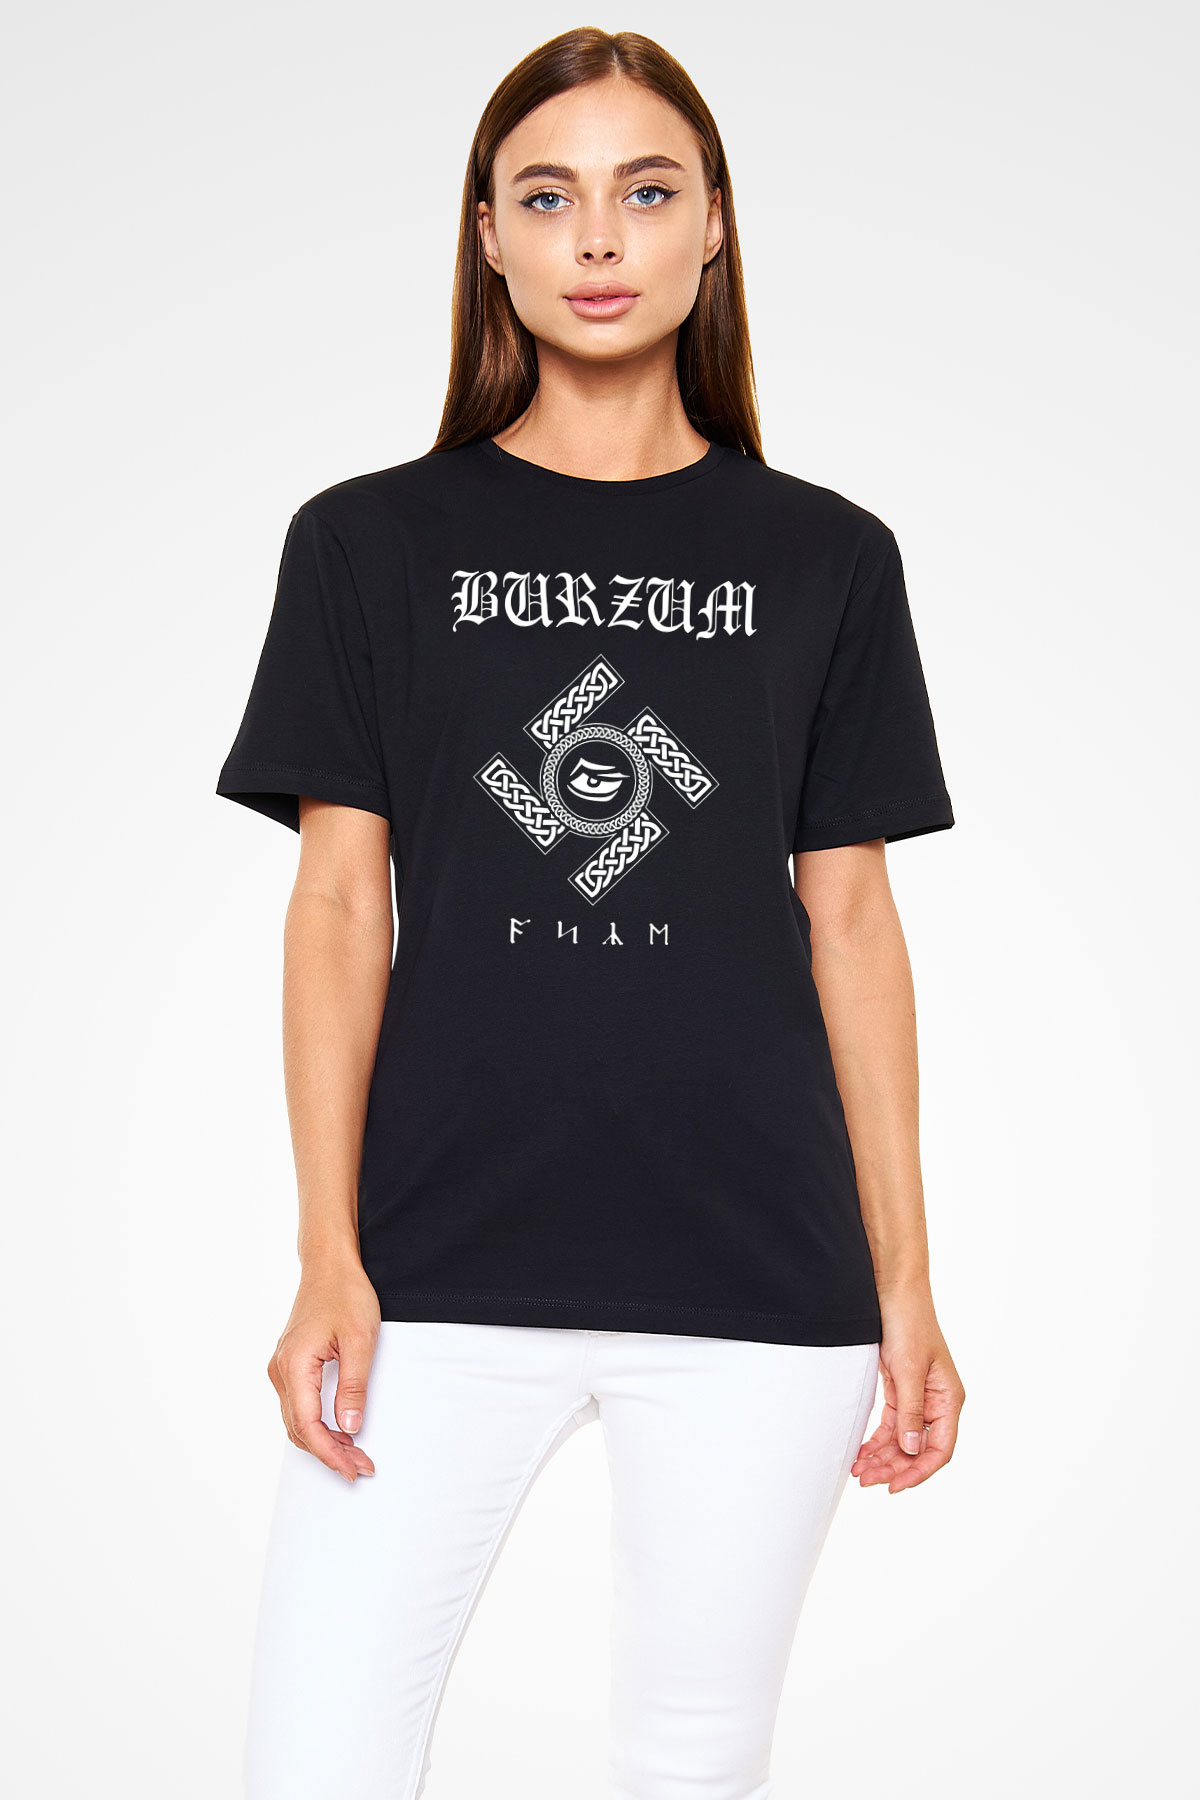 Burzum Black Unisex T-Shirt - Tees - Shirts